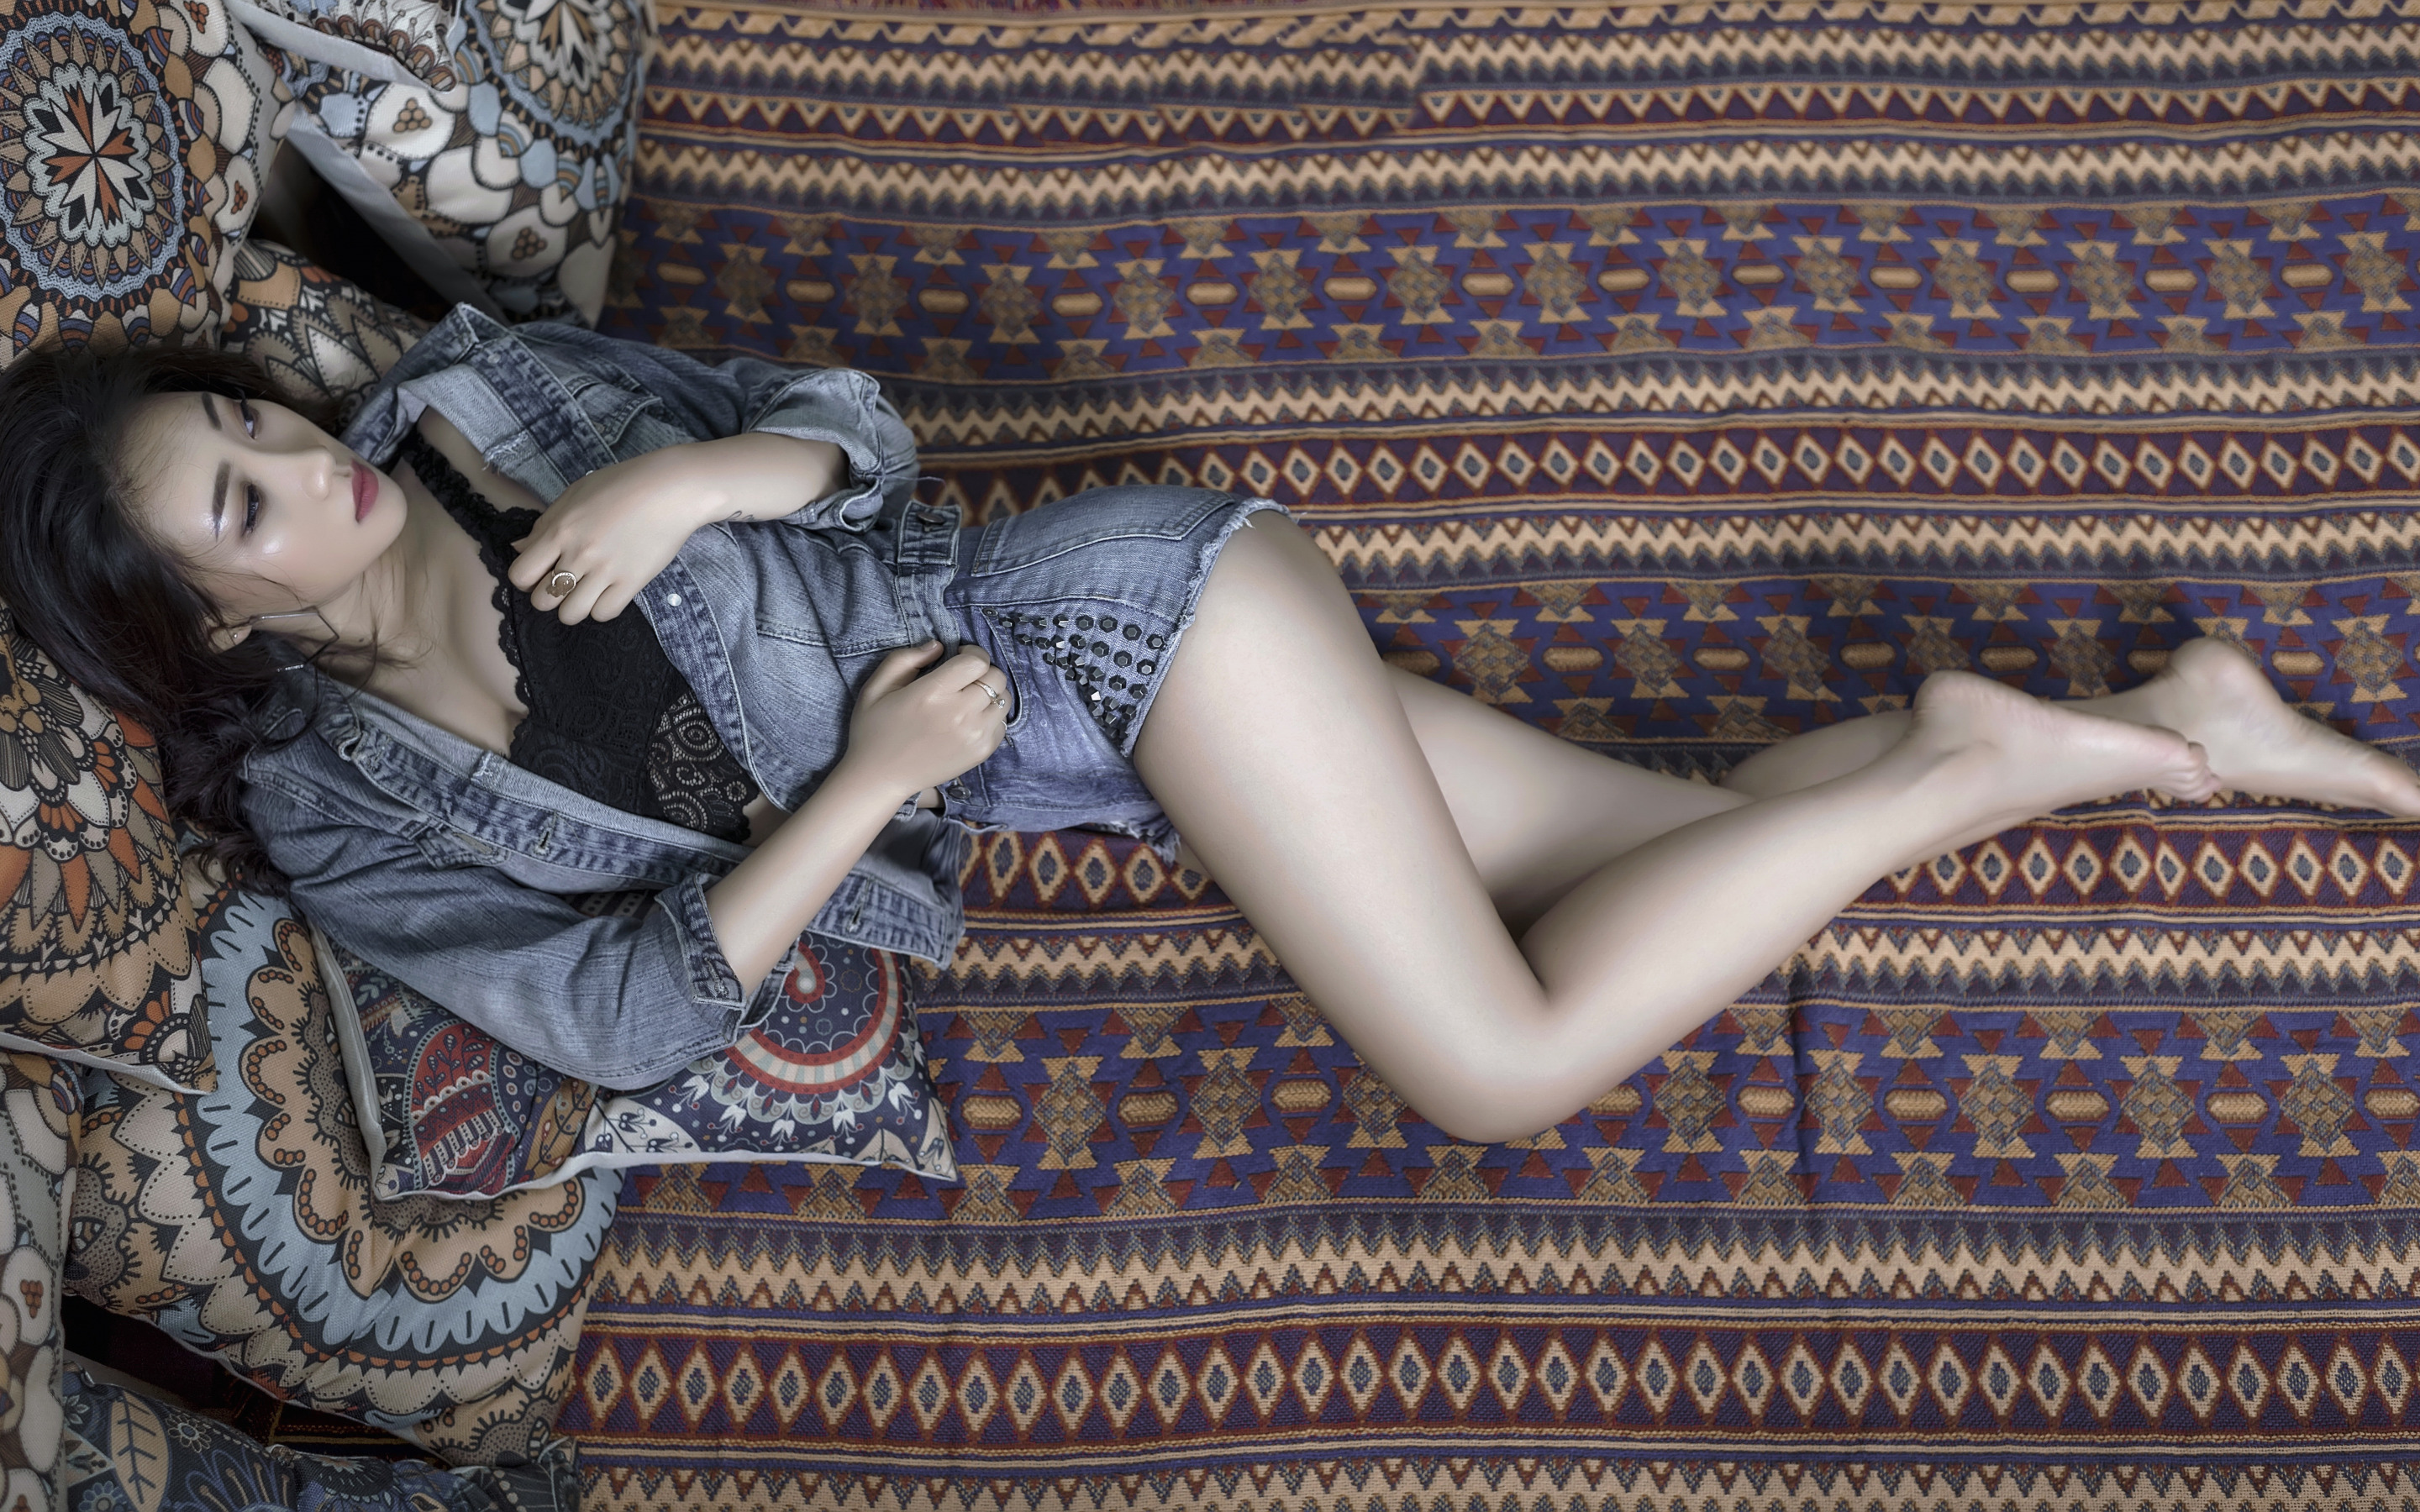 Asian Model Women Long Hair Dark Hair Lying Down Pillow Jeans Jacket Bed Barefoot Legs Black Top 2880x1800